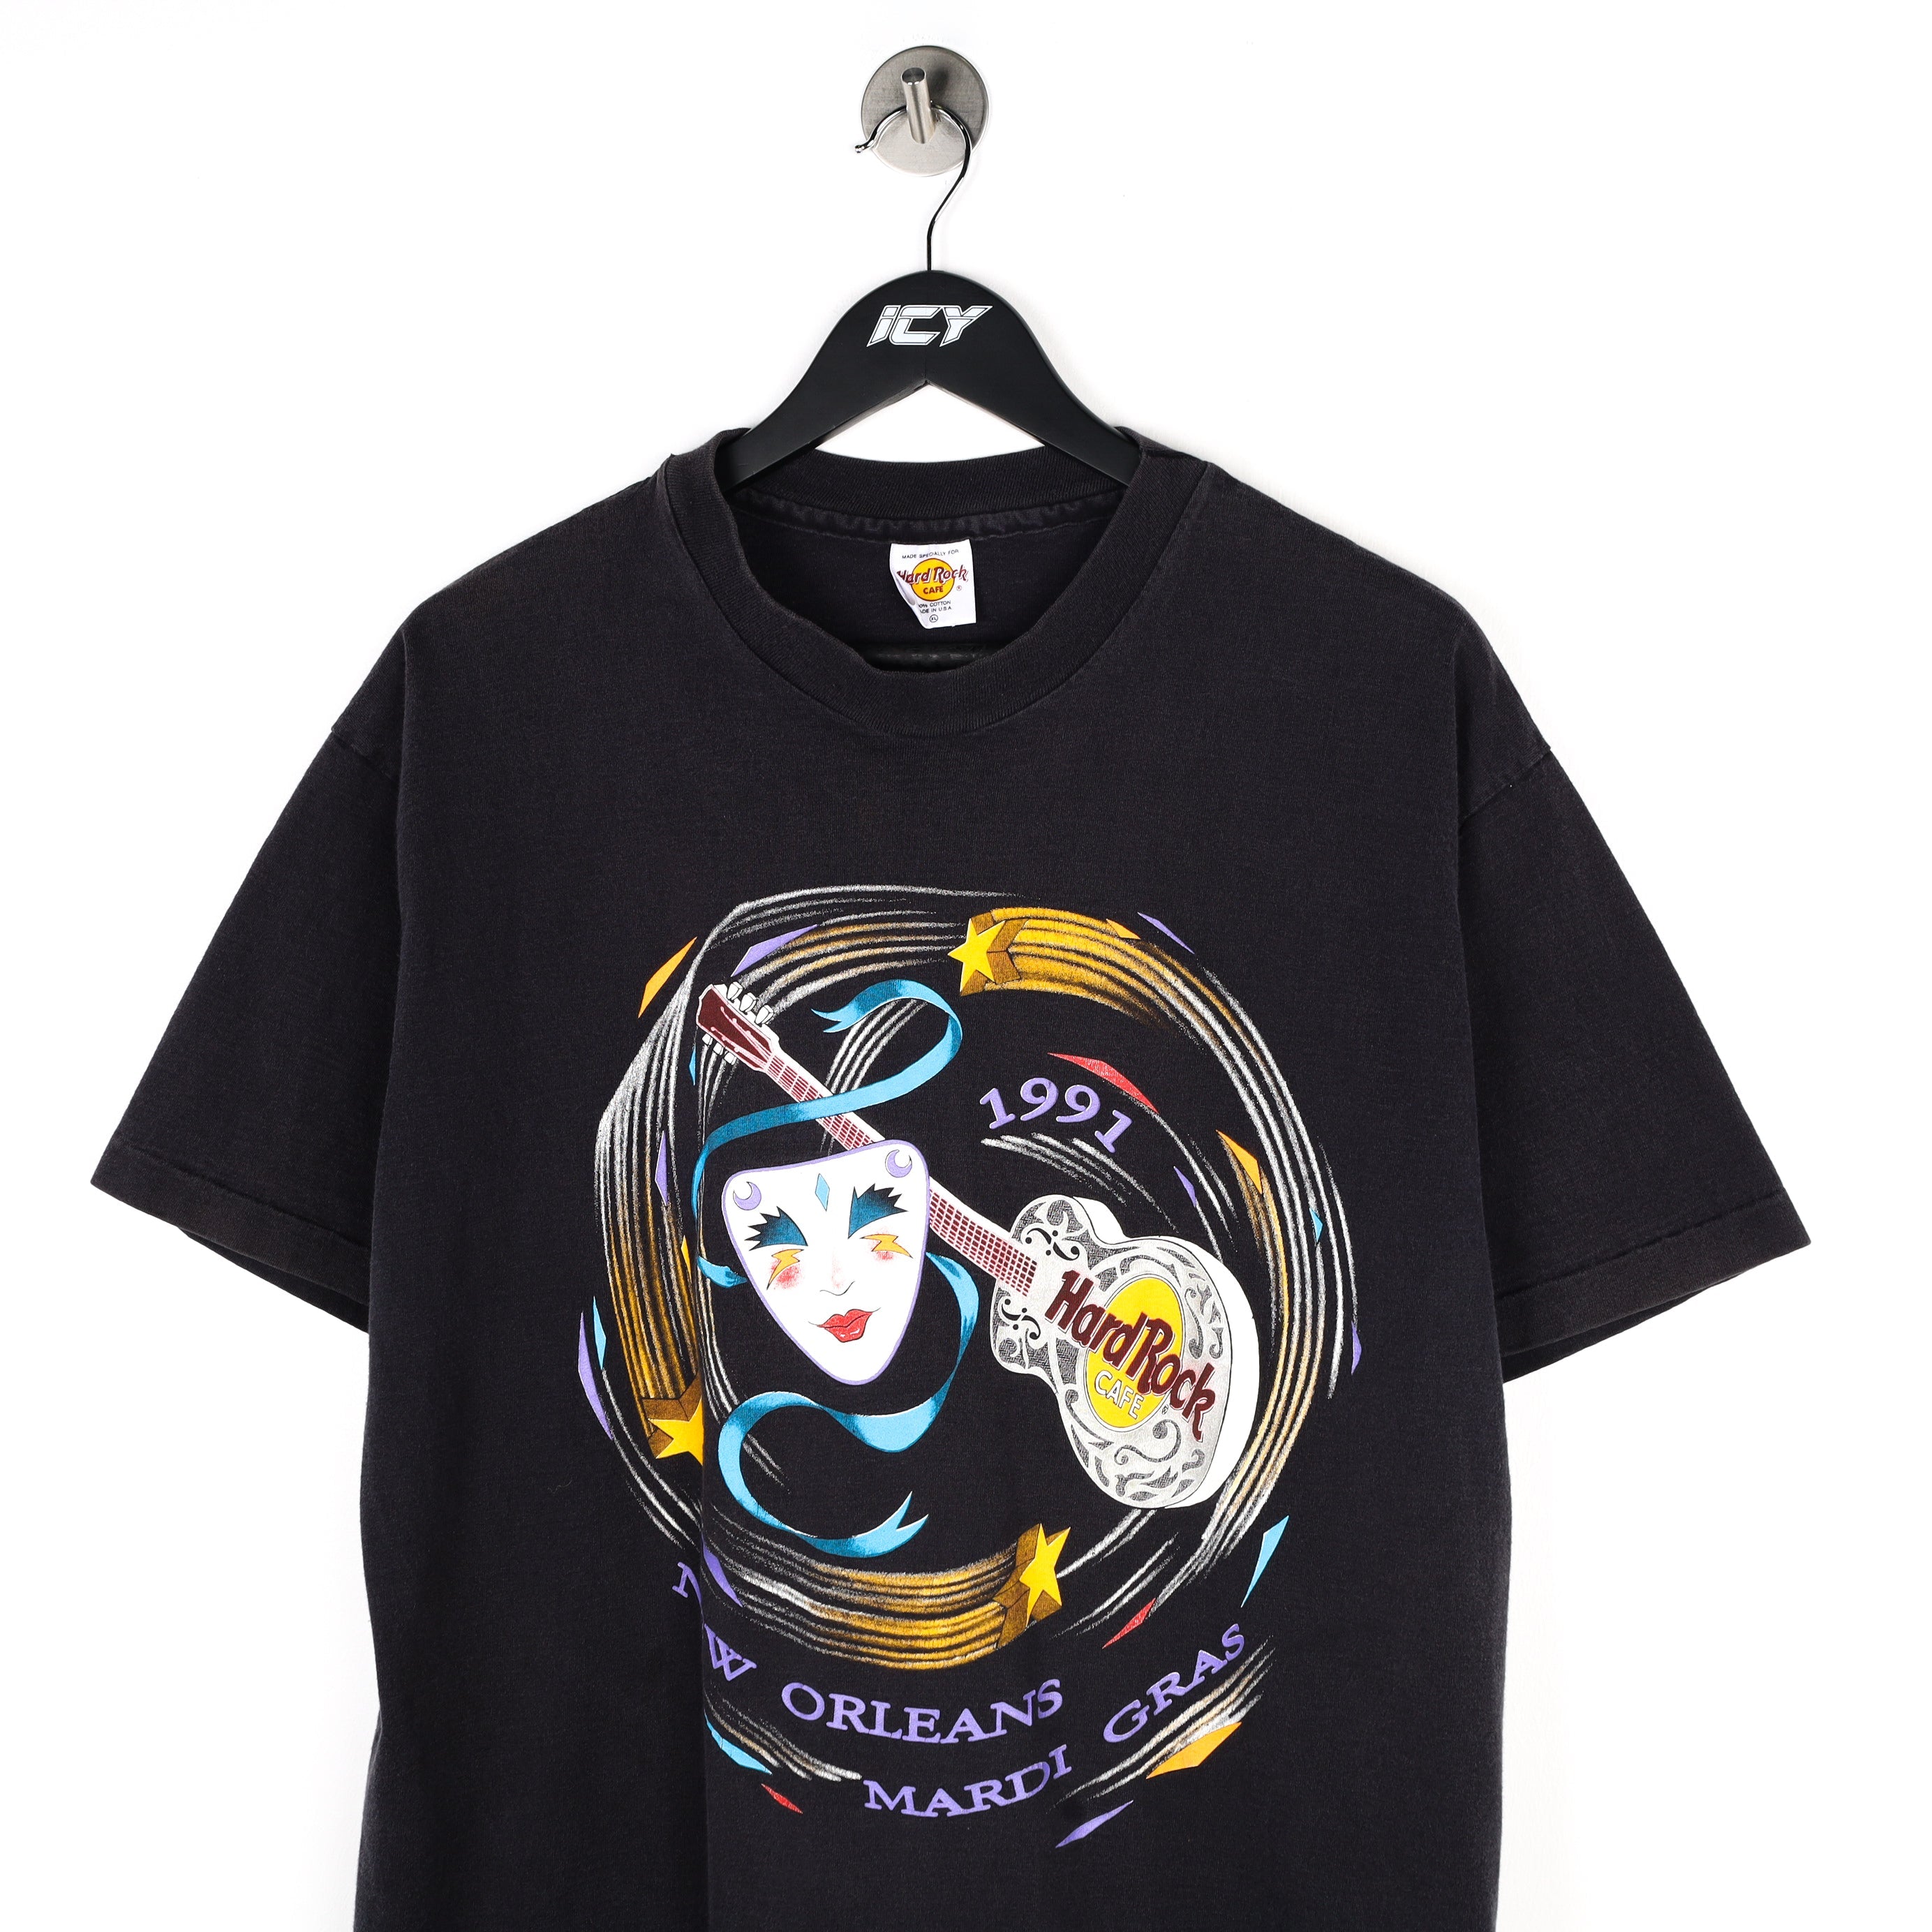 Vintage 1991 New Orleans Hard Rock Cafe Graphic T-Shirt - XL